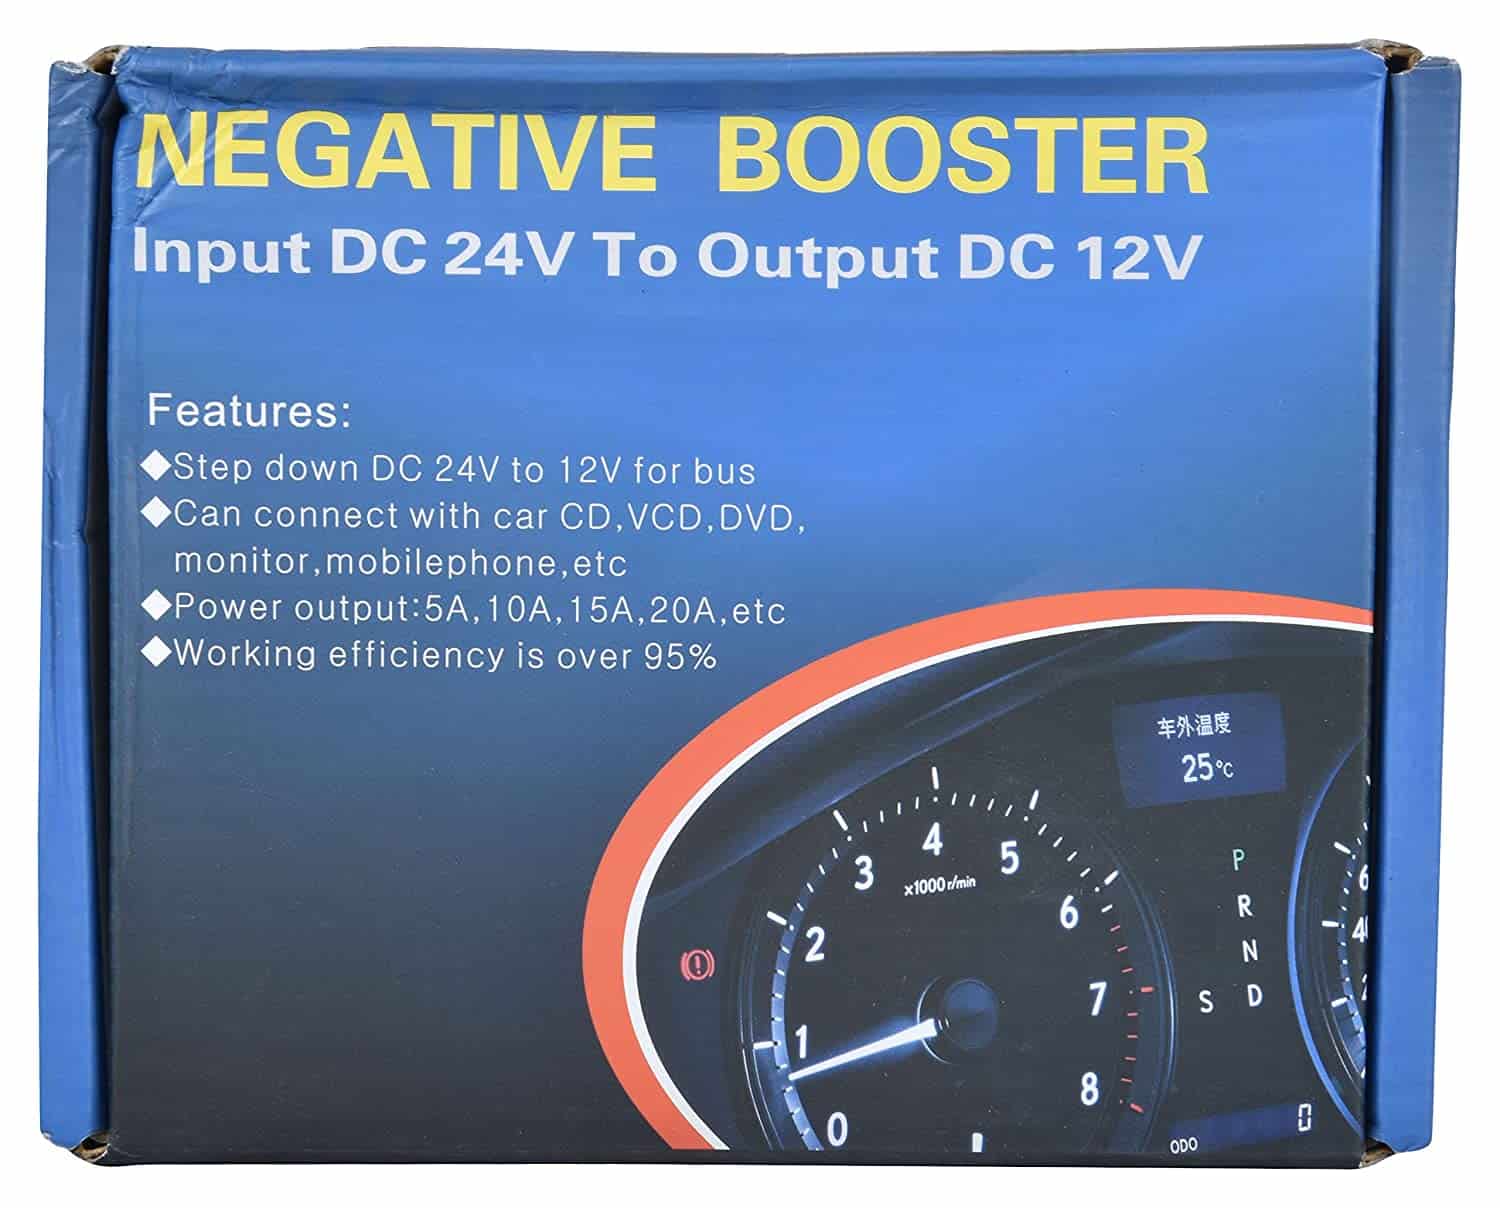 Geomex Negative Booster Input DC 24V to Output DC 12V